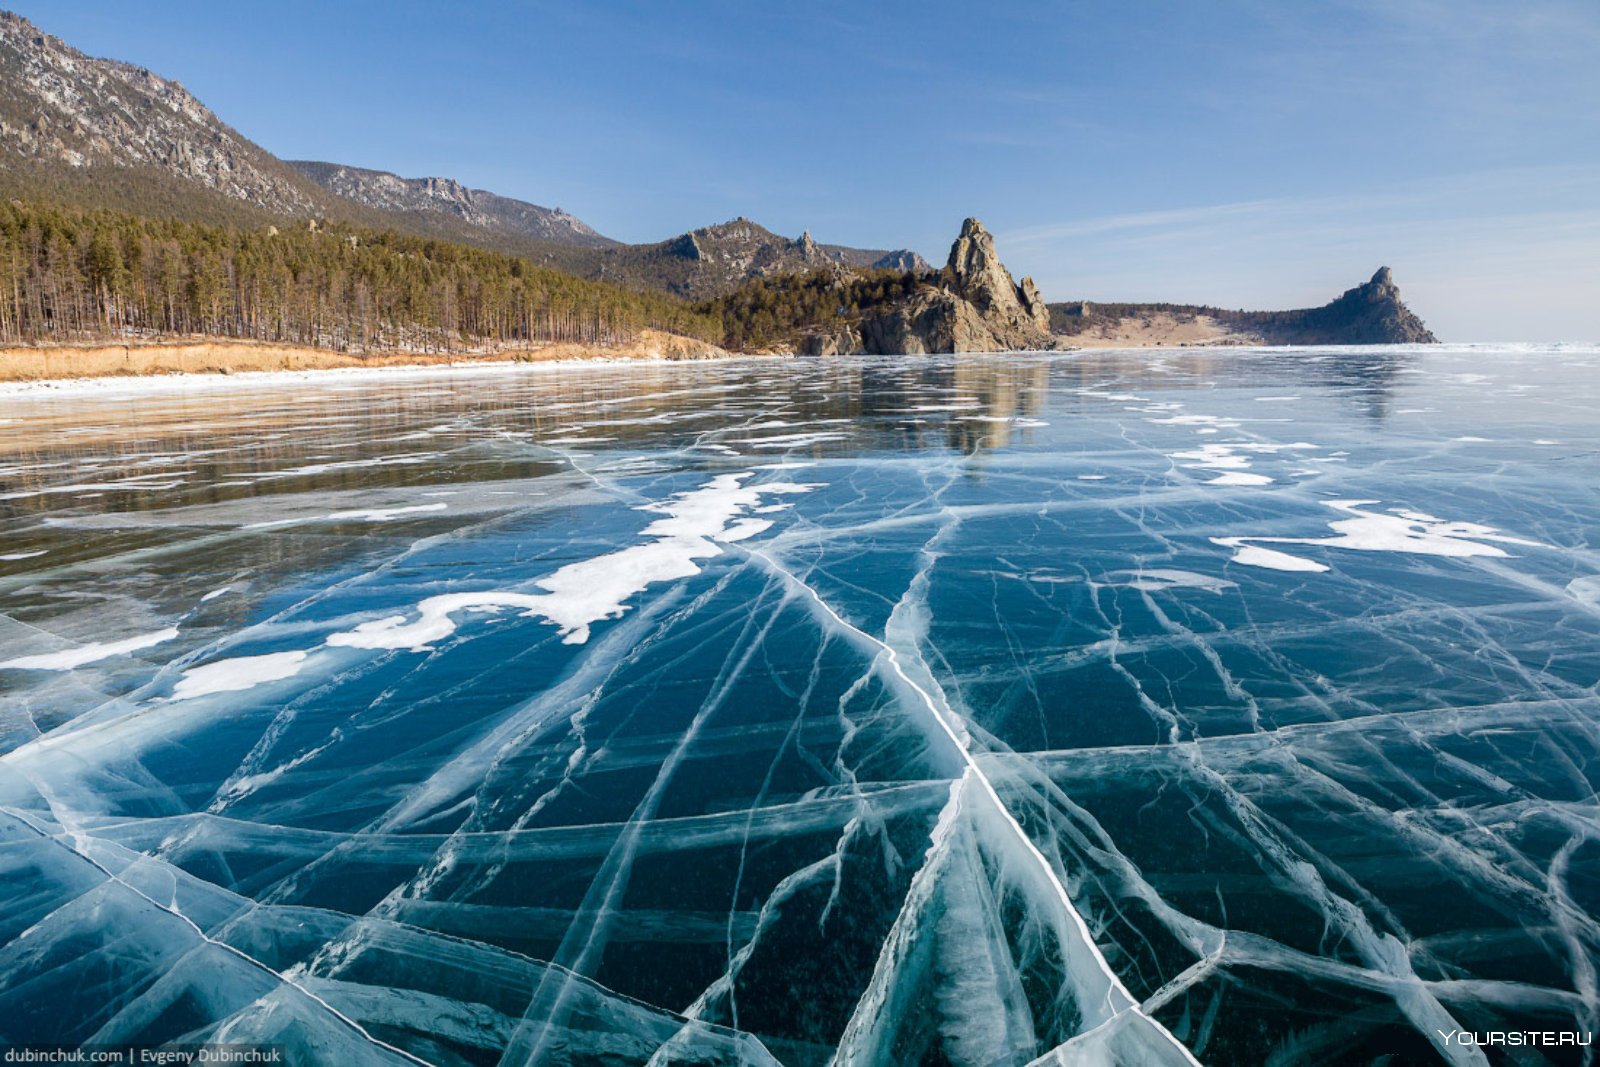 Мелкий лед на воде. Озеро Байкал. Байкал Иркутская область. Озеро Байкал, Восточная Сибирь. Восточная Сибирь Байкал.